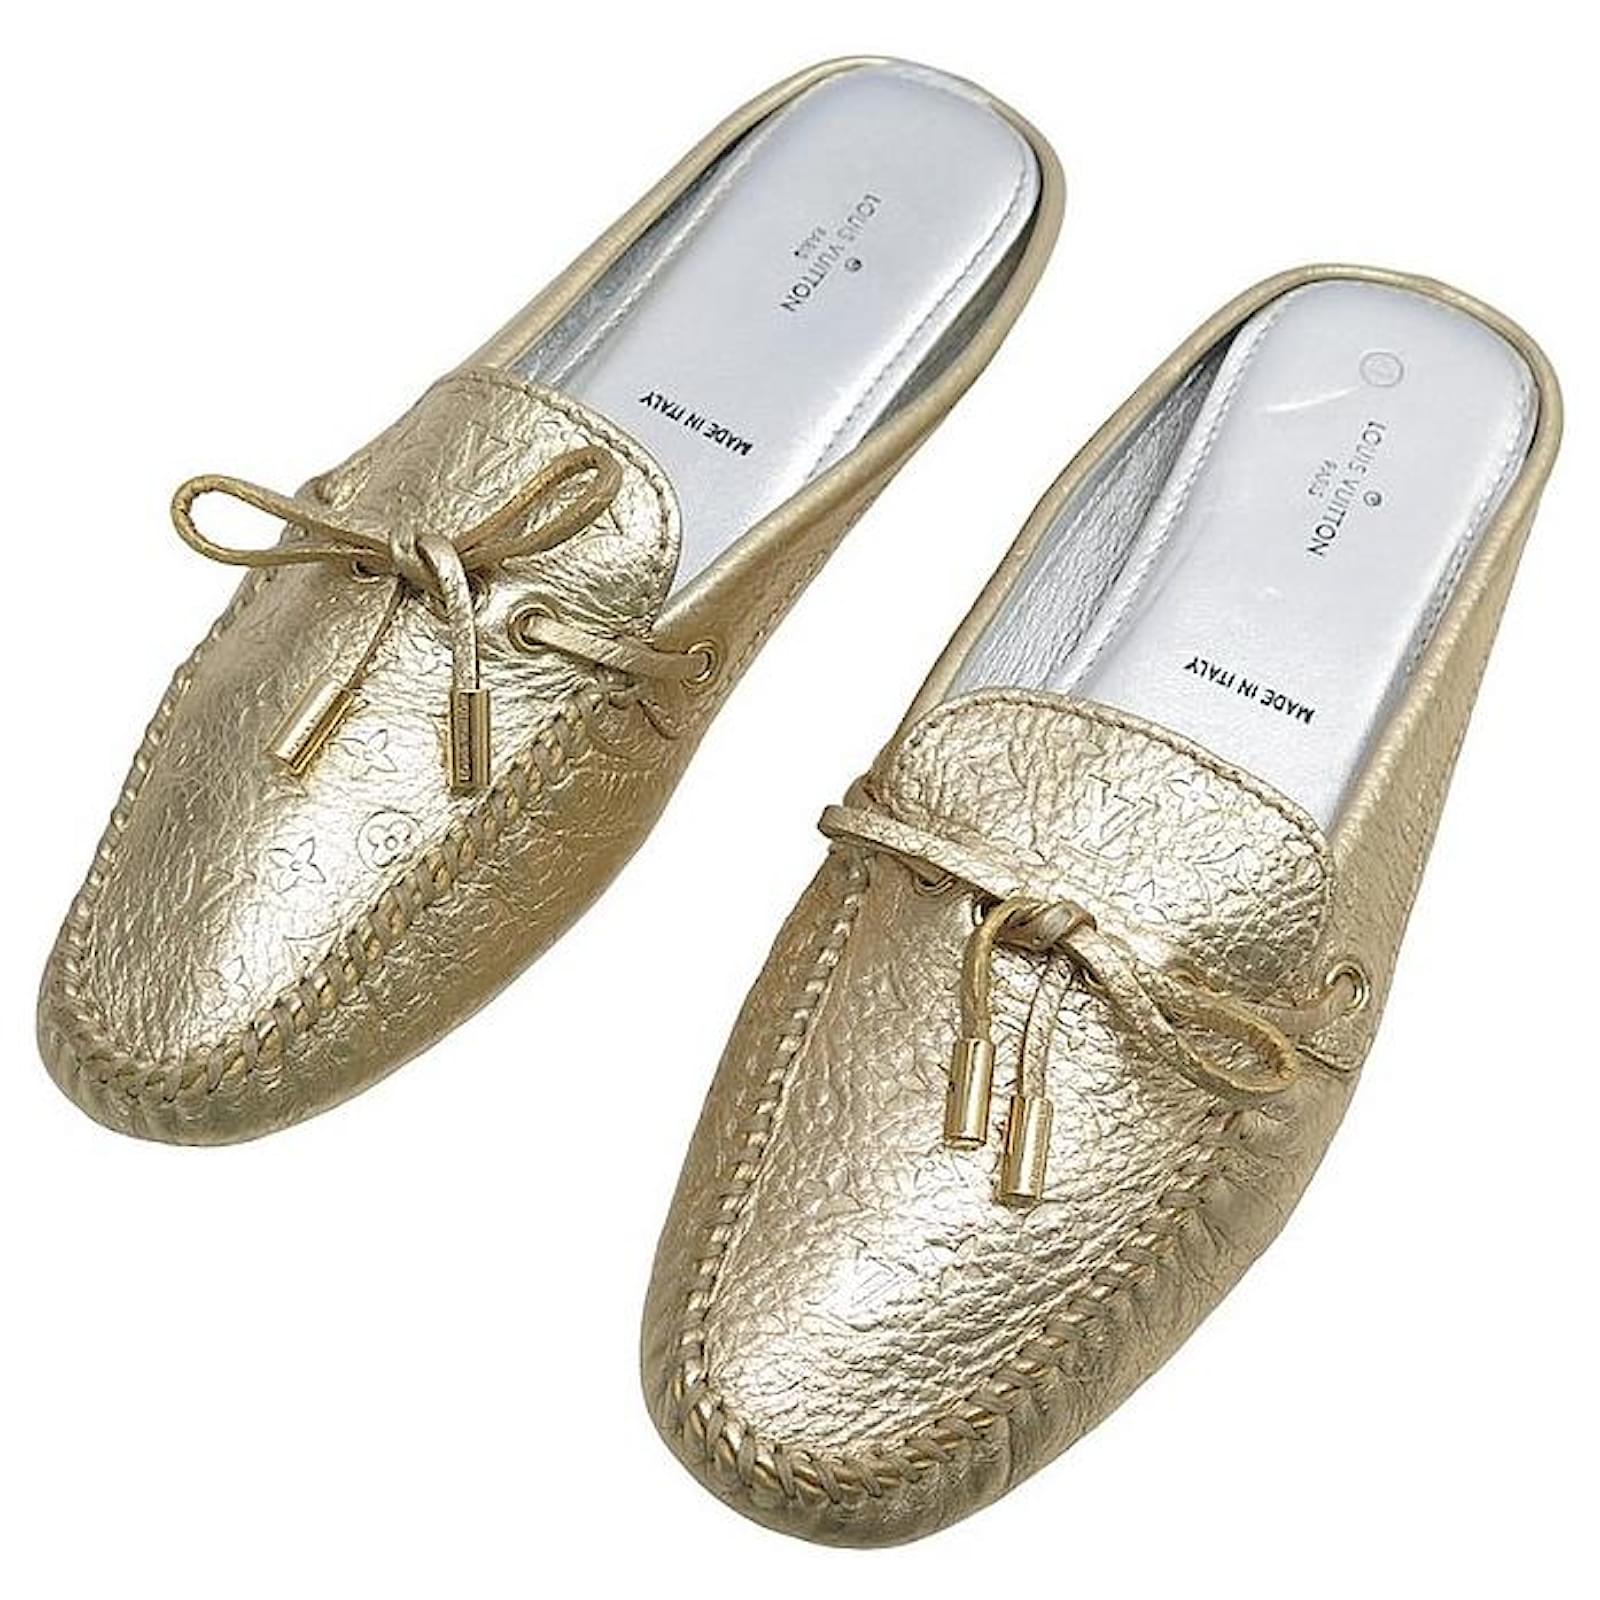 Louis Vuitton, Shoes, Louis Vuitton Academy Loafer